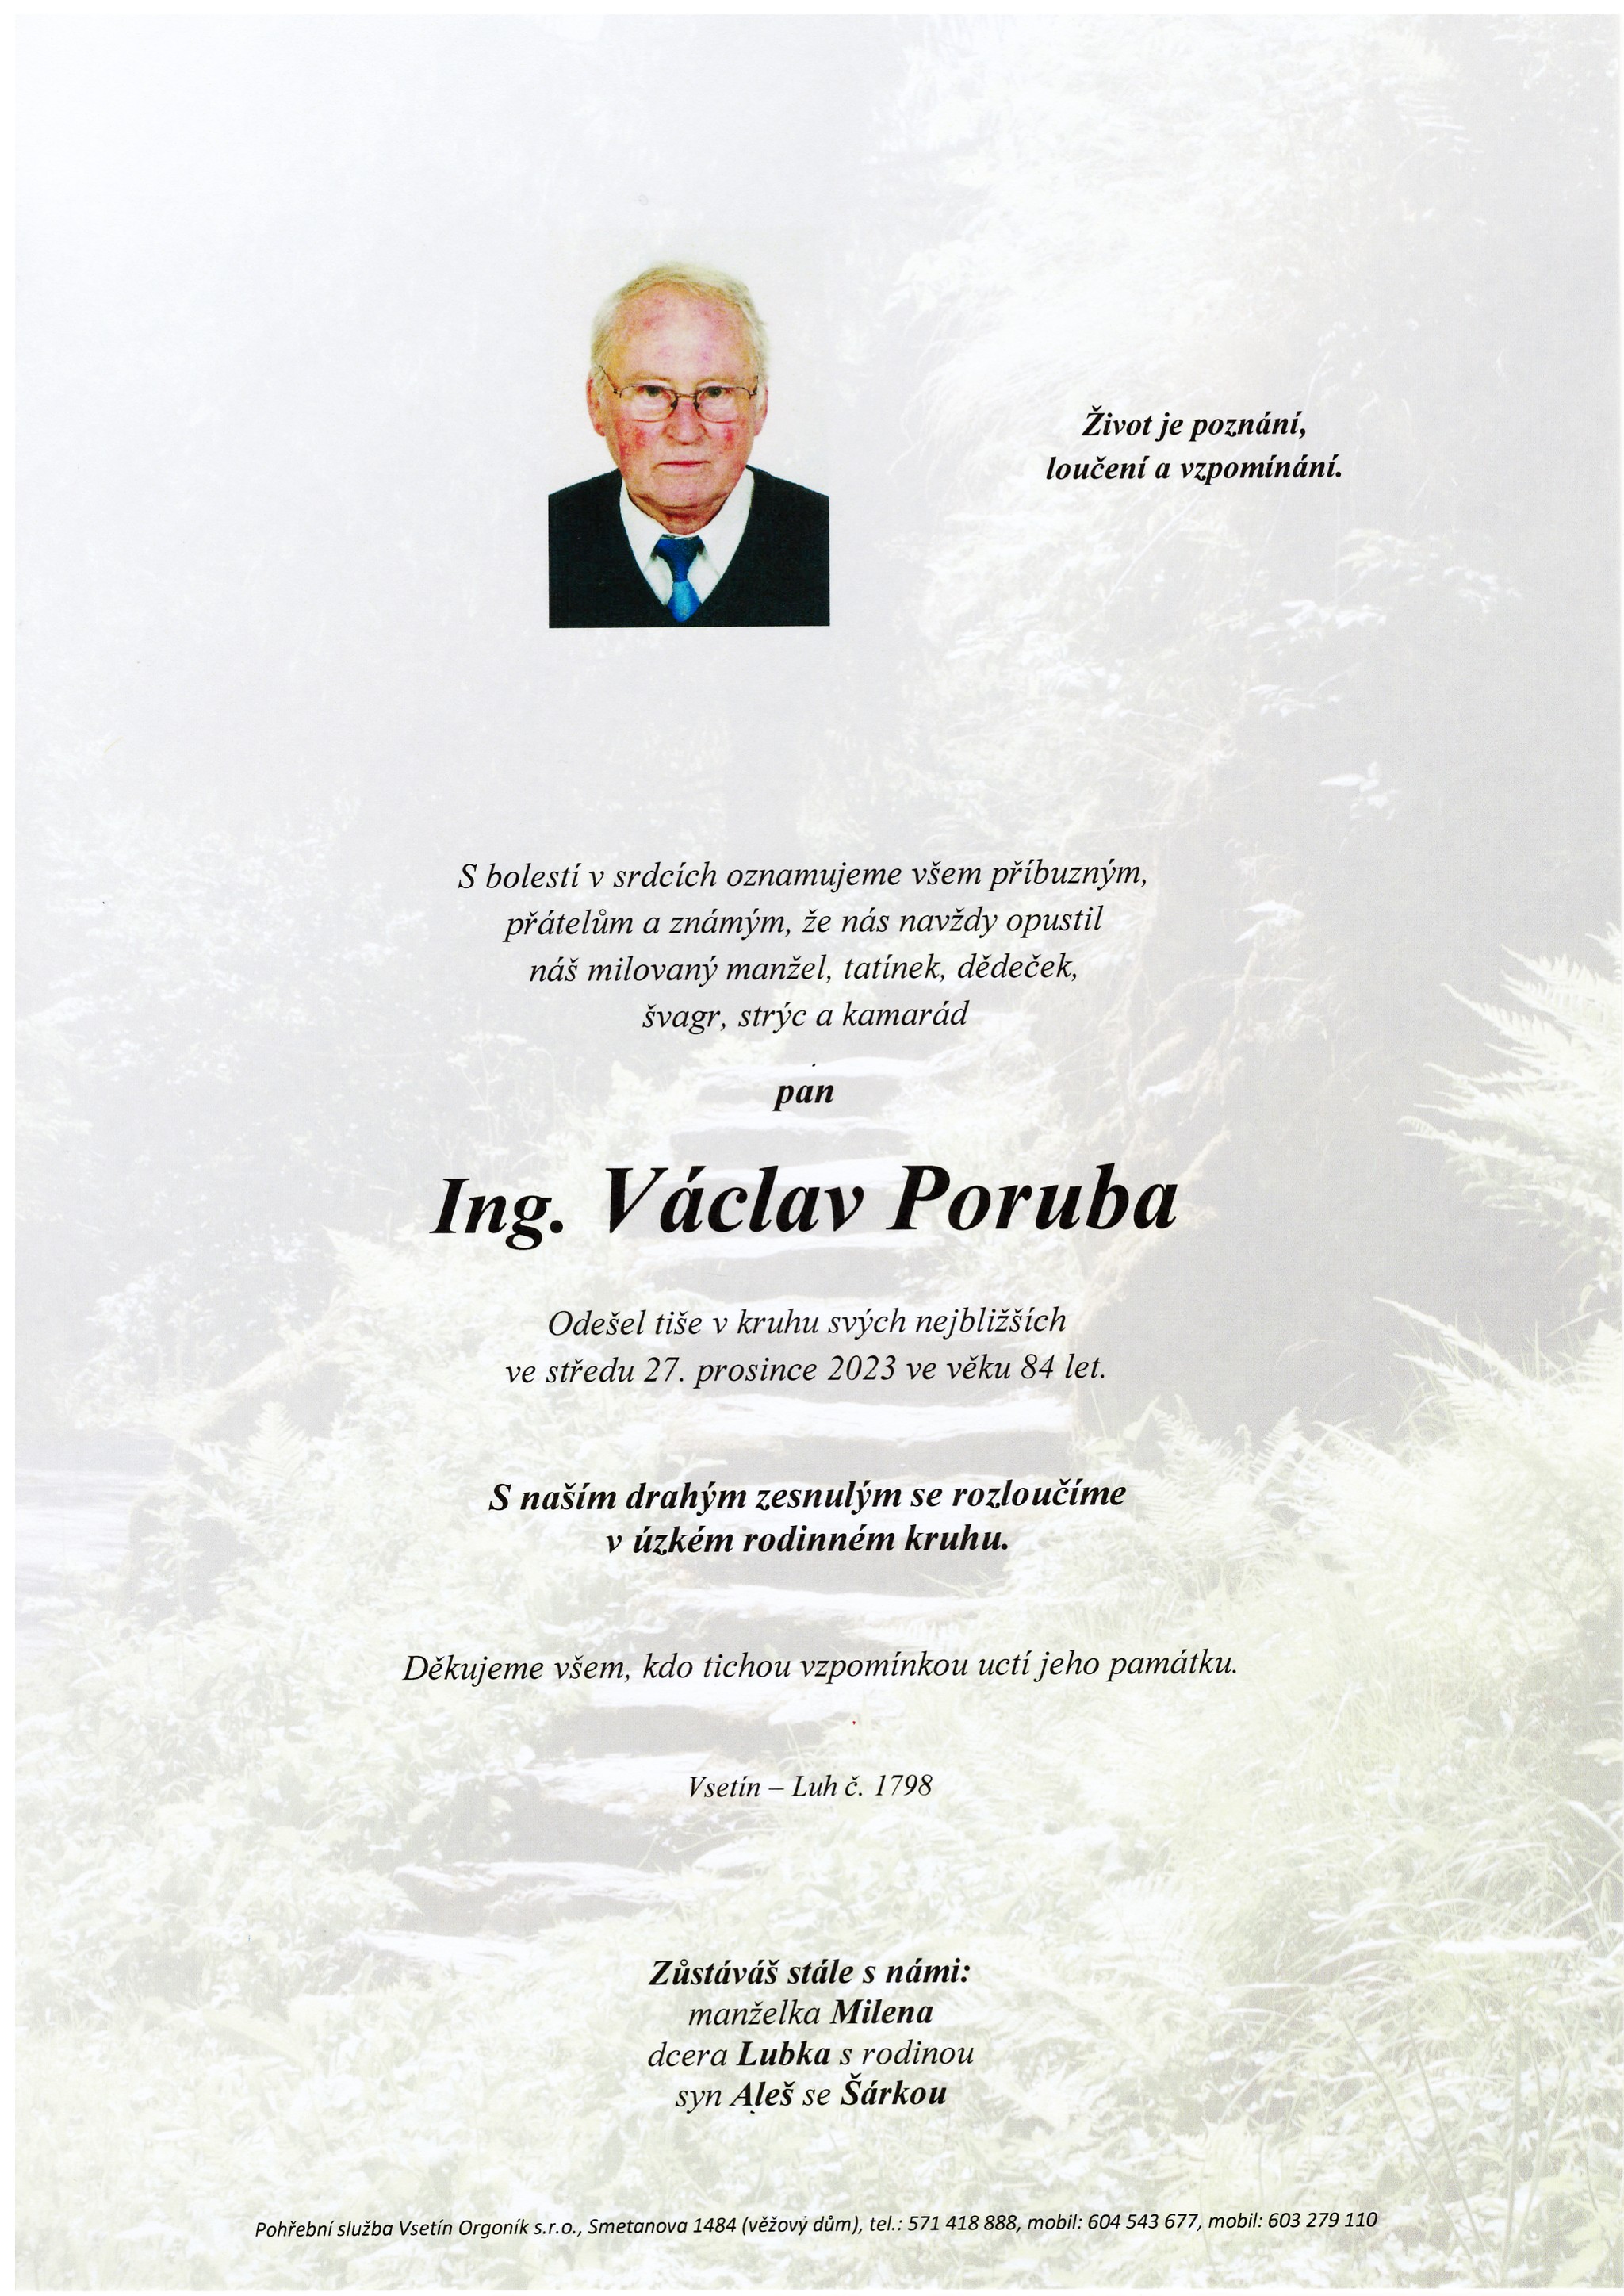 Ing. Václav Poruba